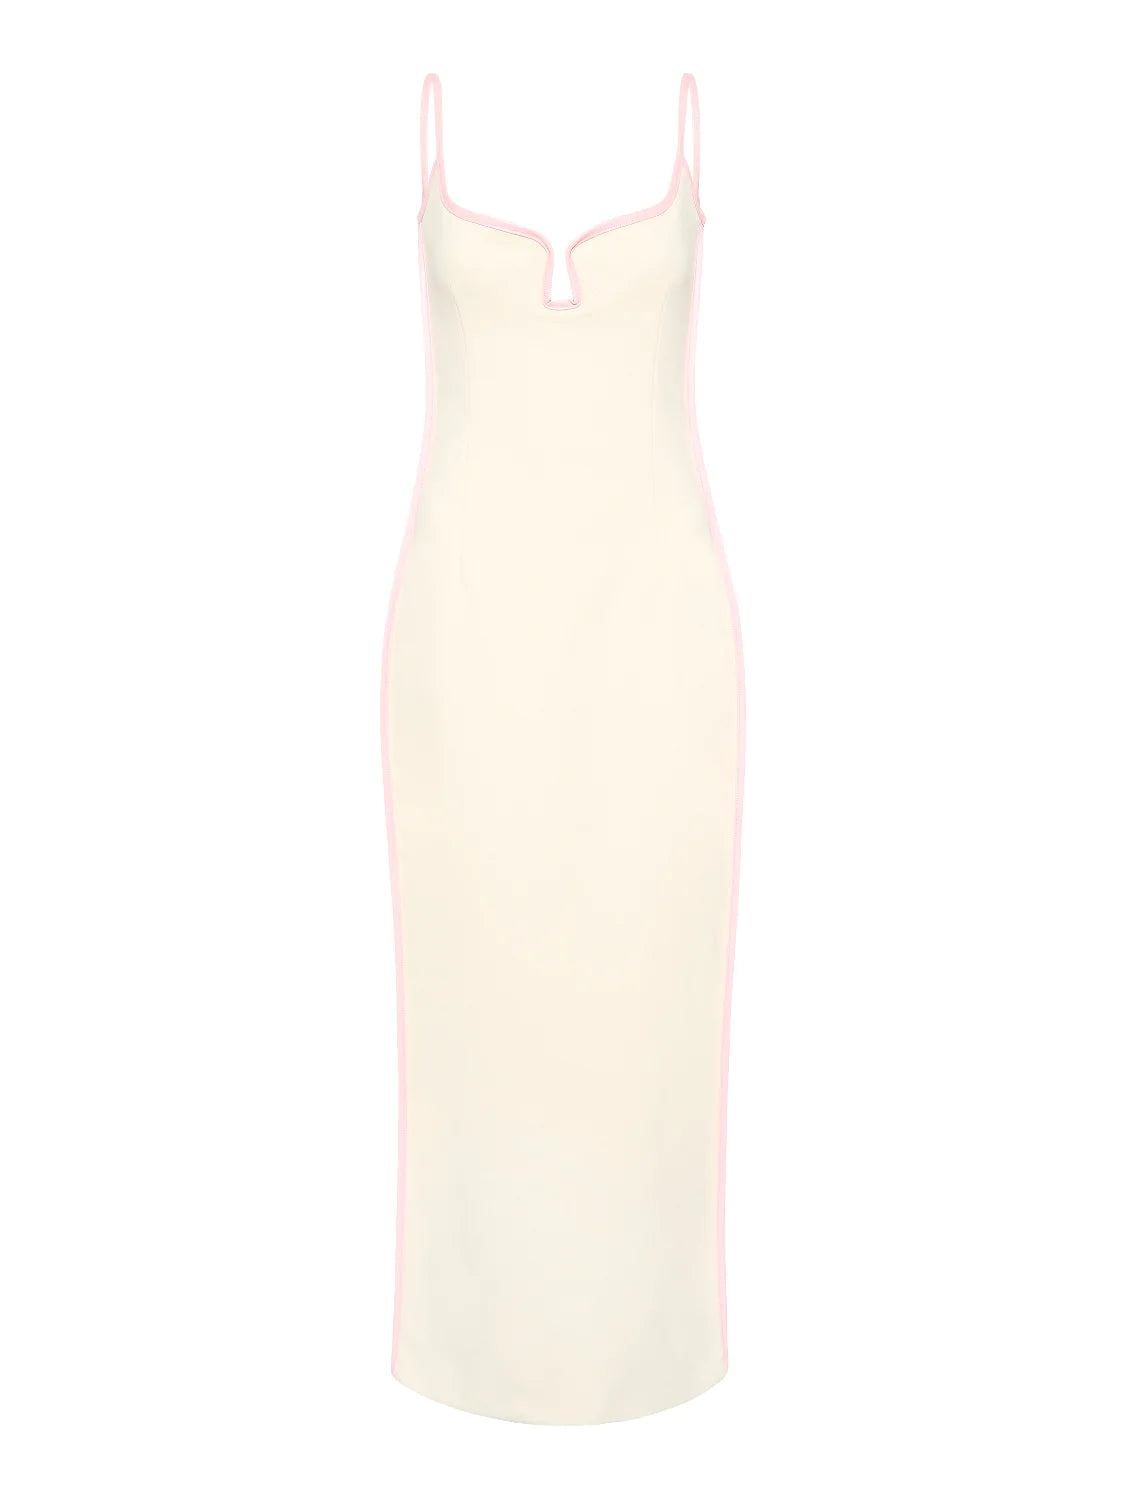 Marlo dress in cream with bubblegum